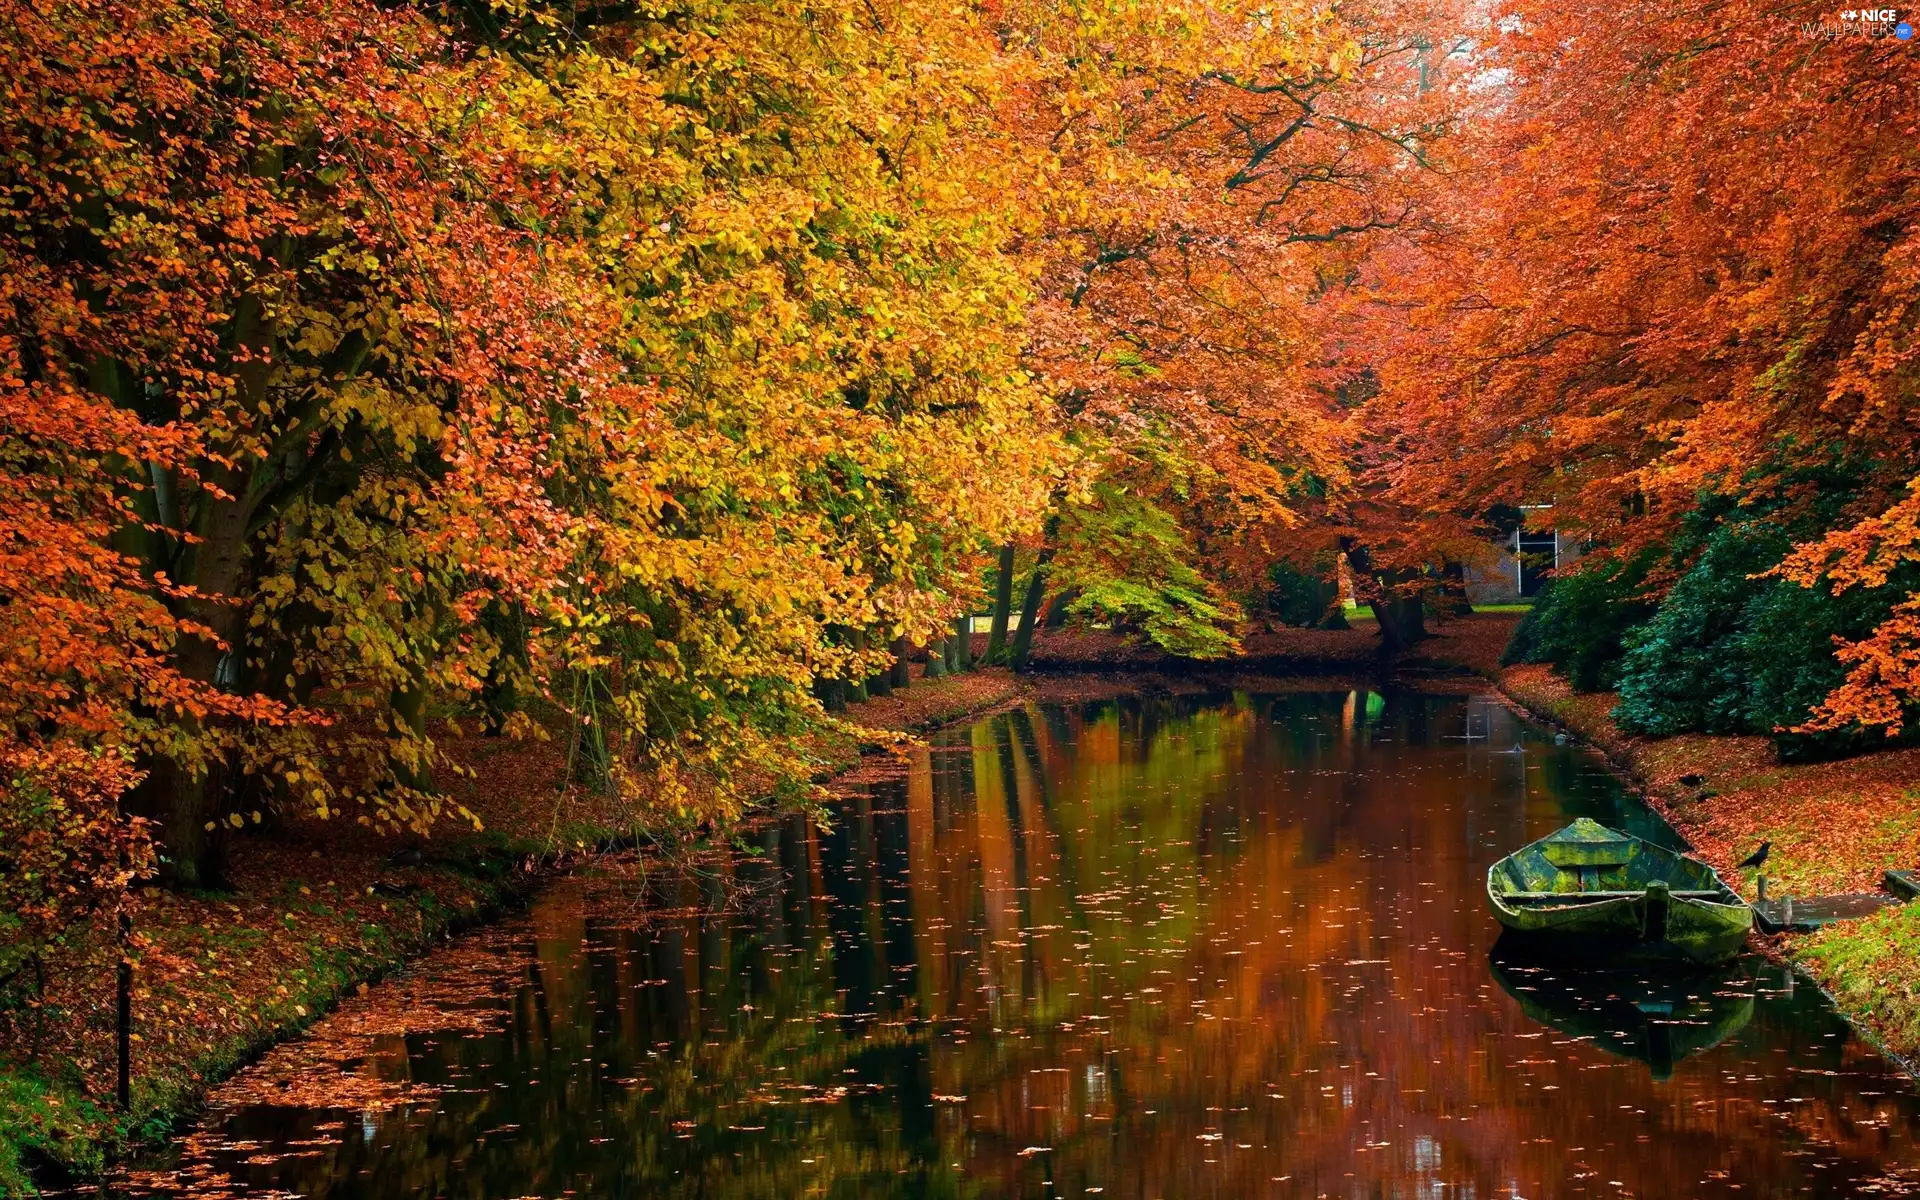 Boat, autumn, Park